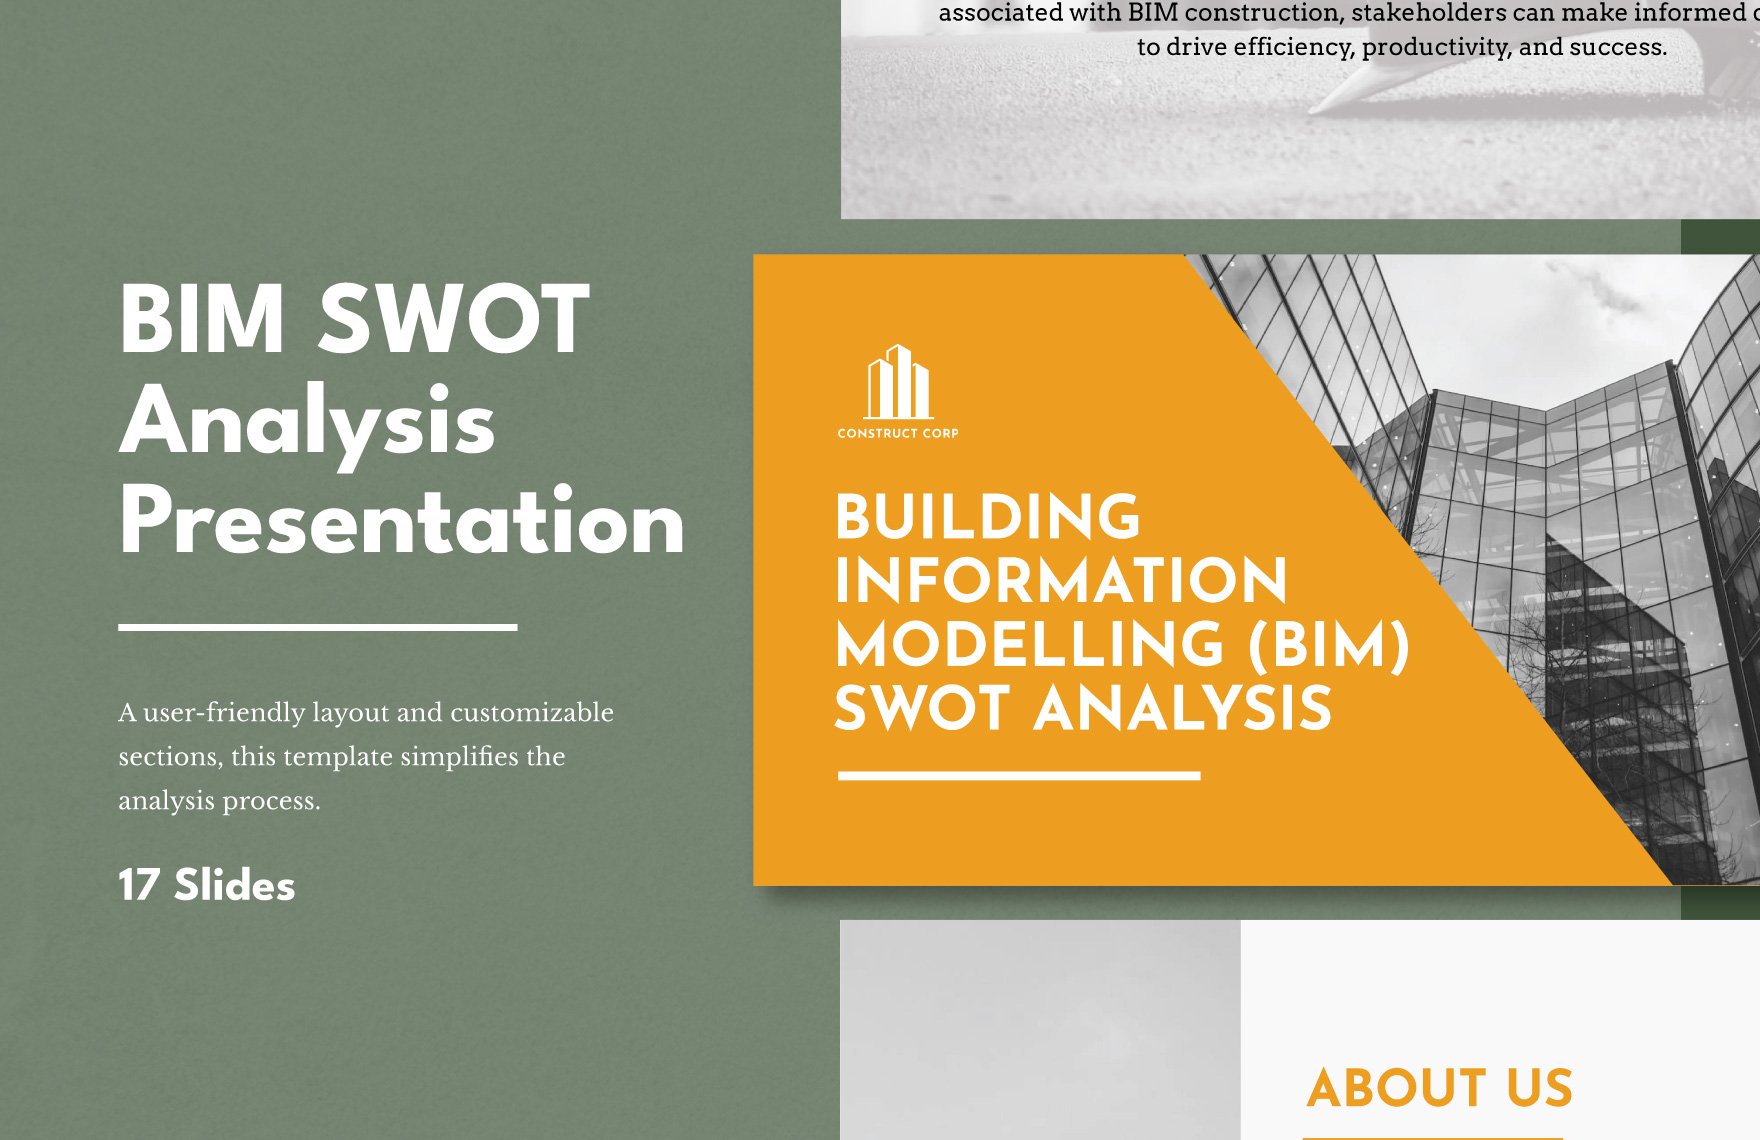 BIM SWOT Analysis Presentation